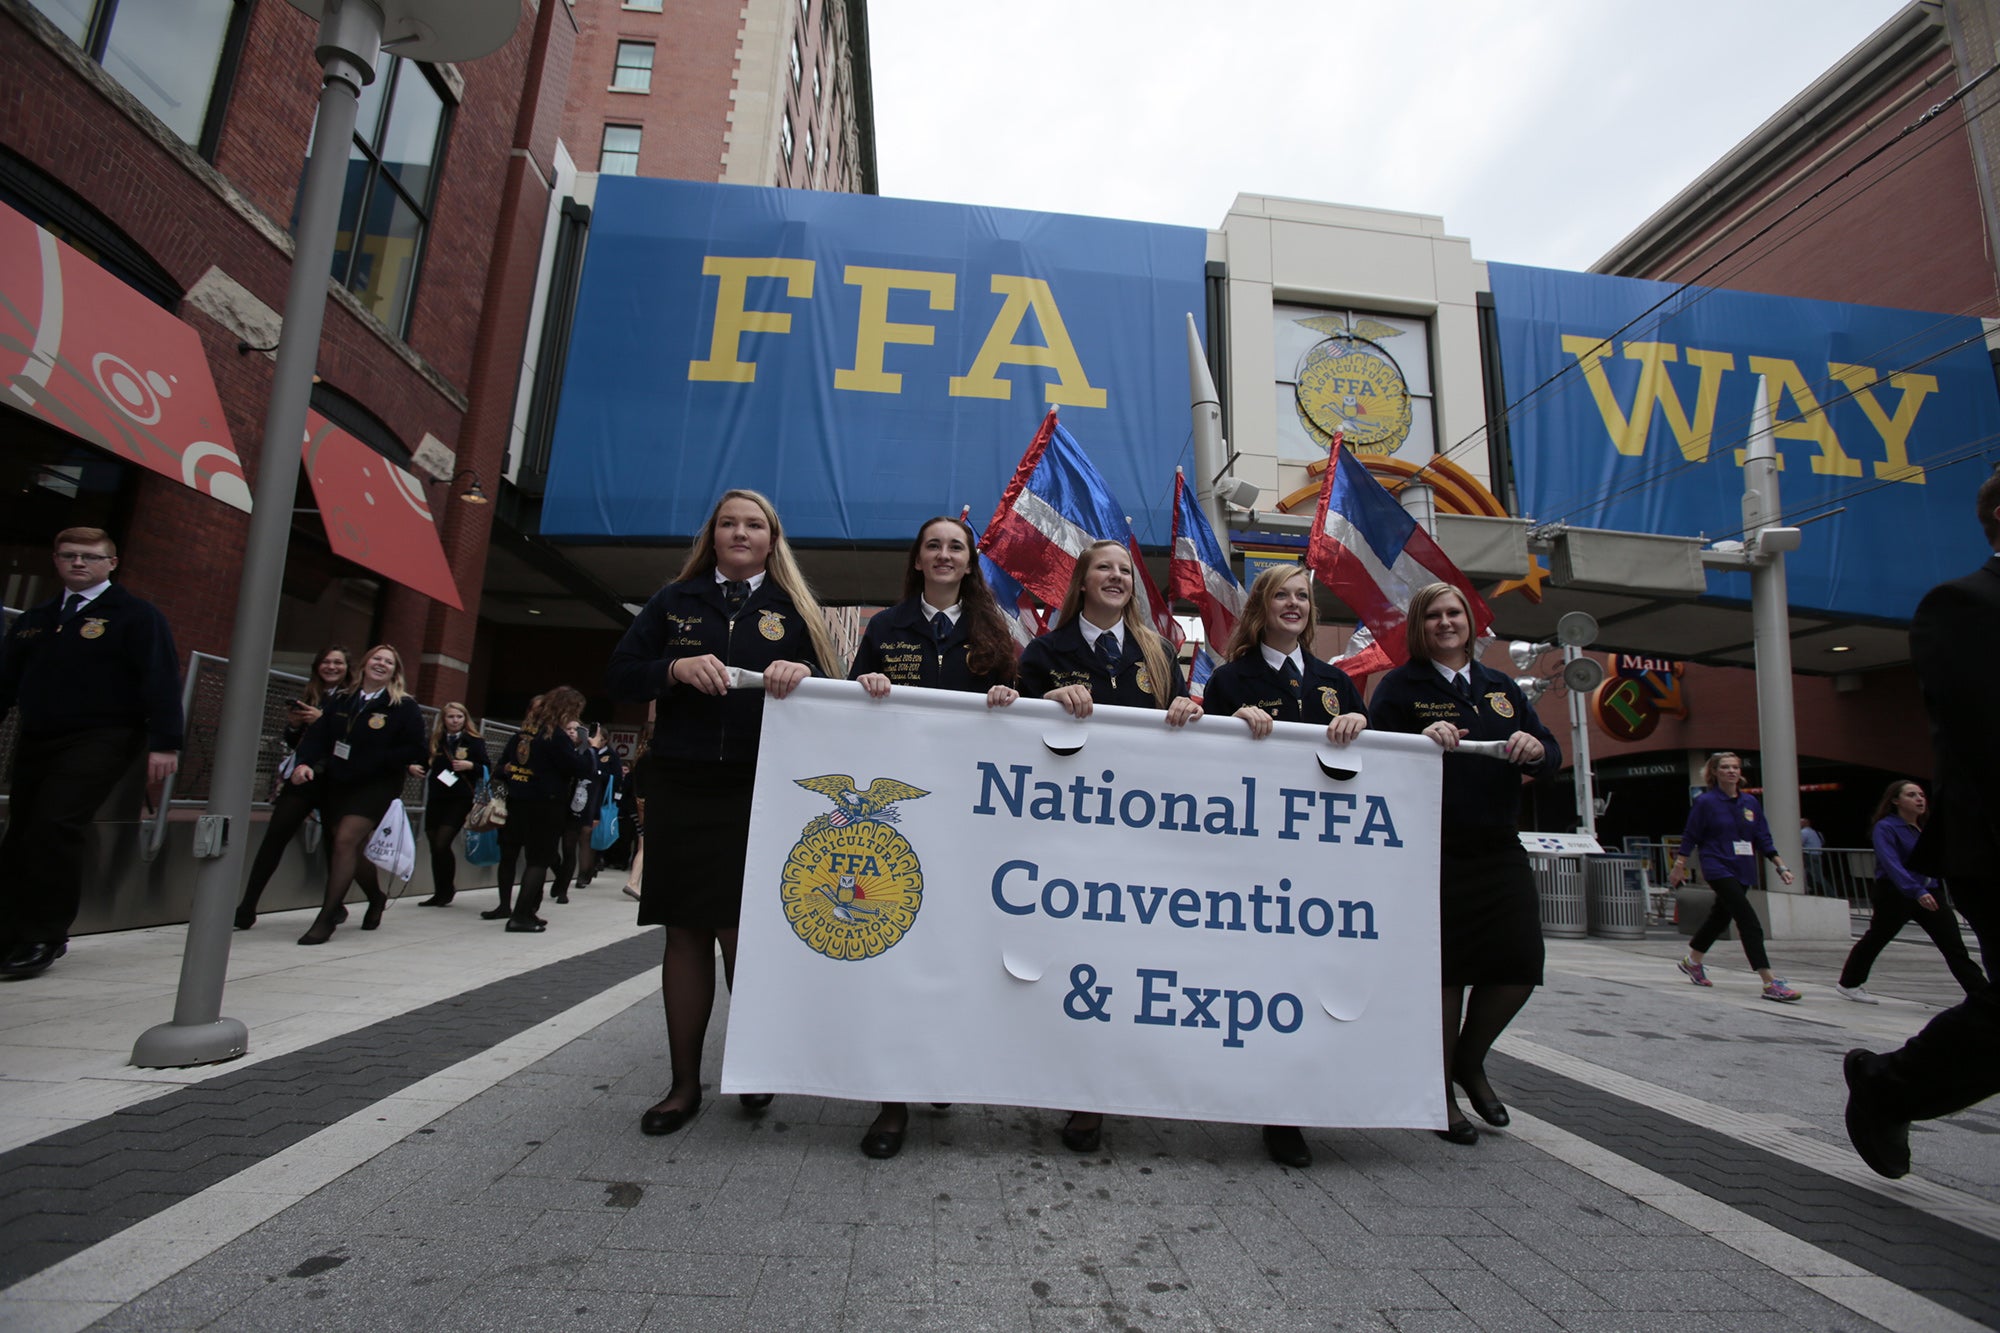 FFA Paved the Way - National FFA Organization